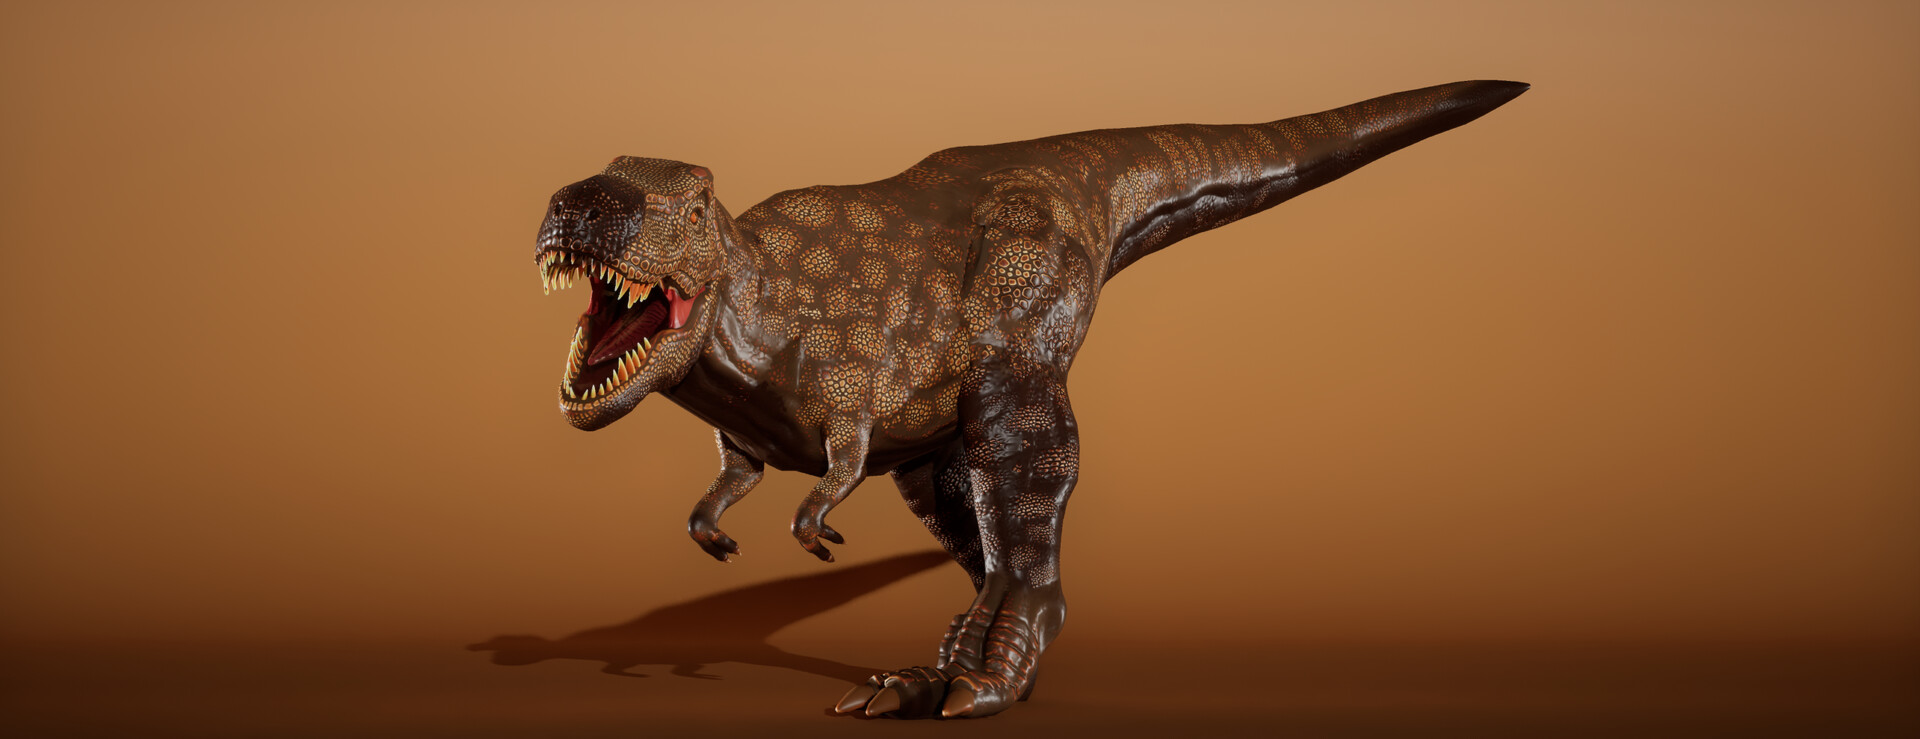 Dinosaur Game 3D Print model with Spring - 3D model by 3DDesigner